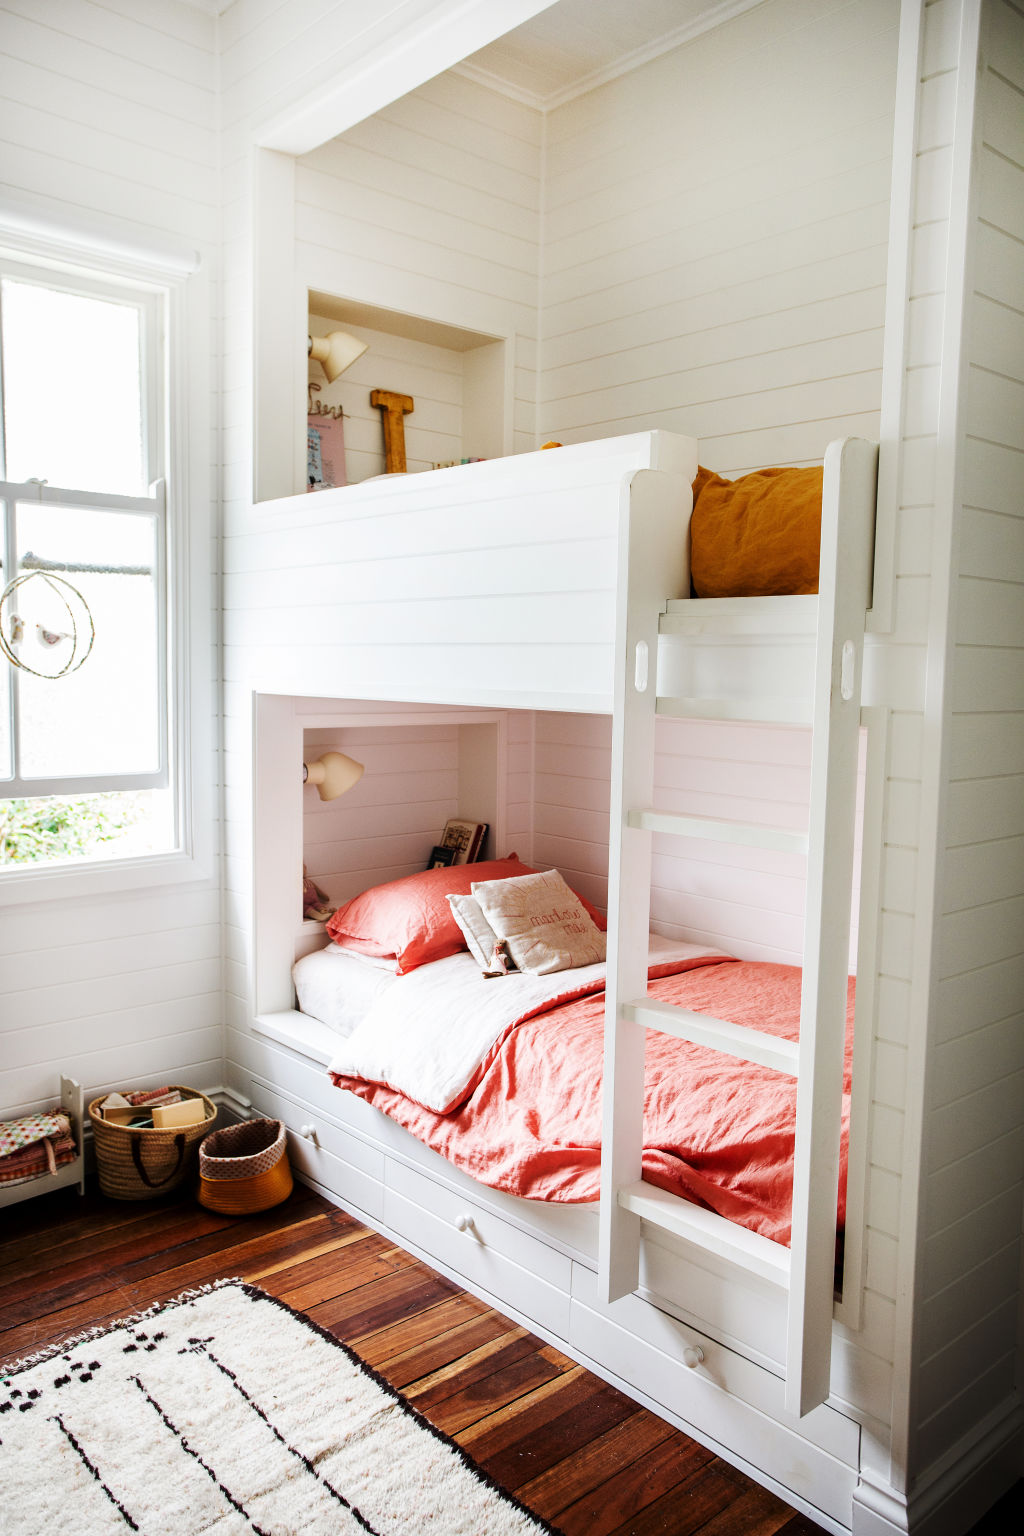 Bunk beds in the girls’ room. Photo: Kara Rosenlund